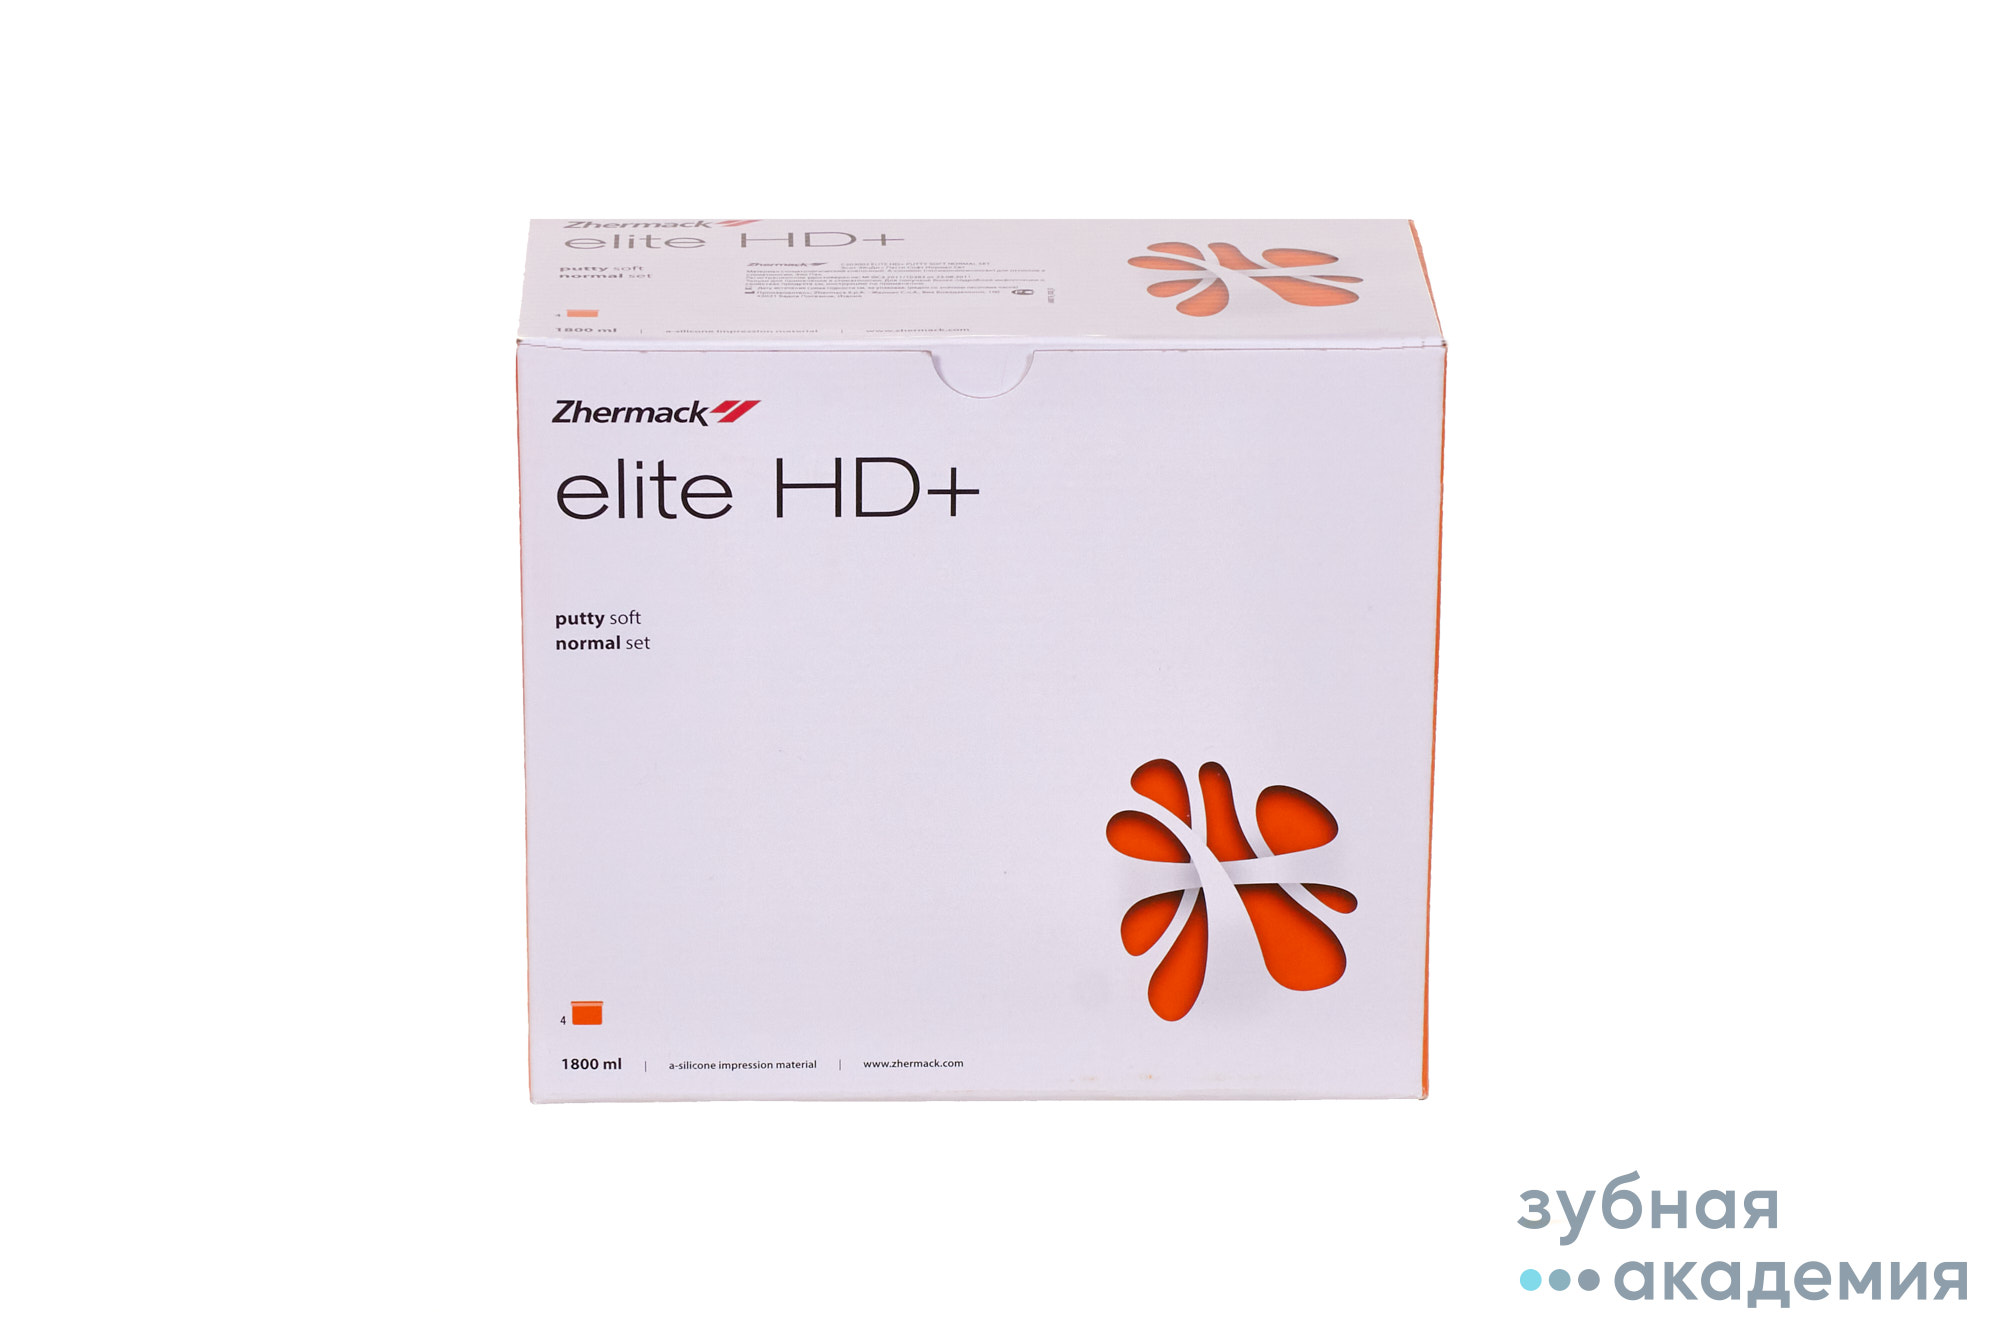 Elite HD + Putty Soft Normal Элит упаковка 4*450 мл/Zhermack/ Италия